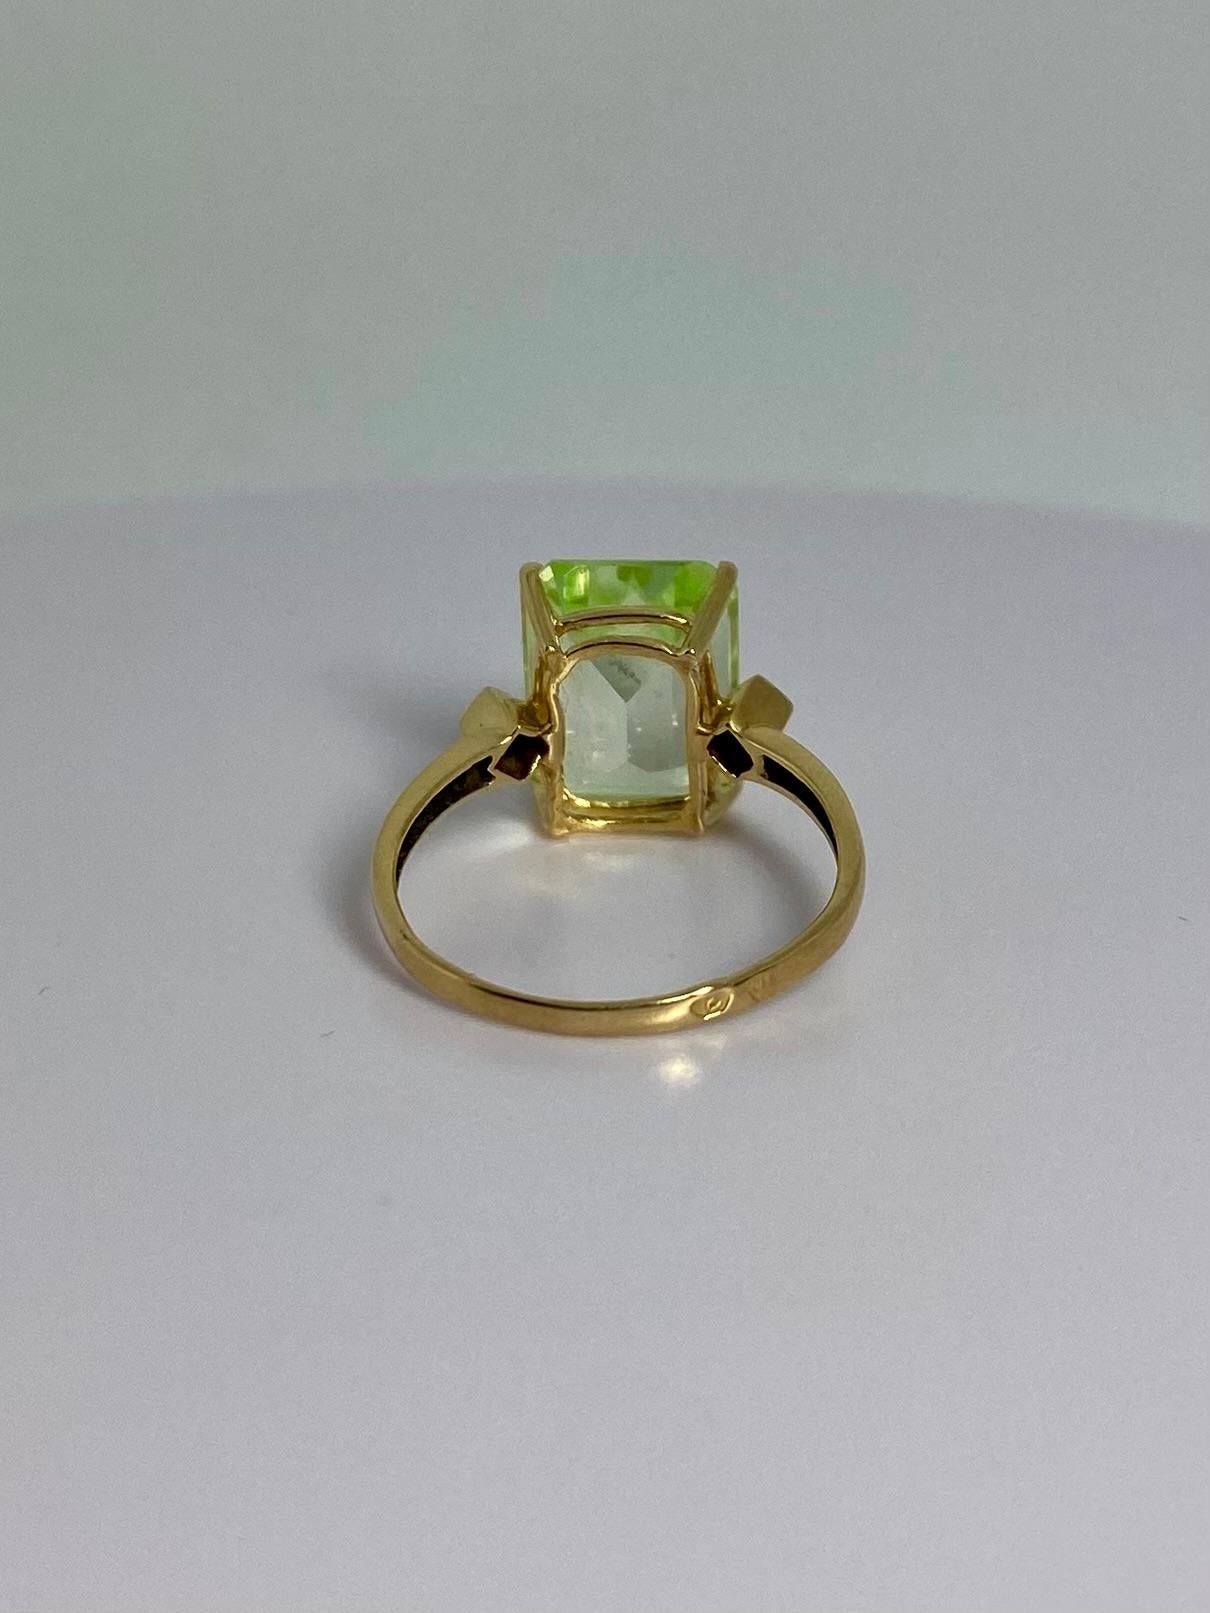 Emerald Cut 18 Carat Ring Yellow Gold with a Peridot